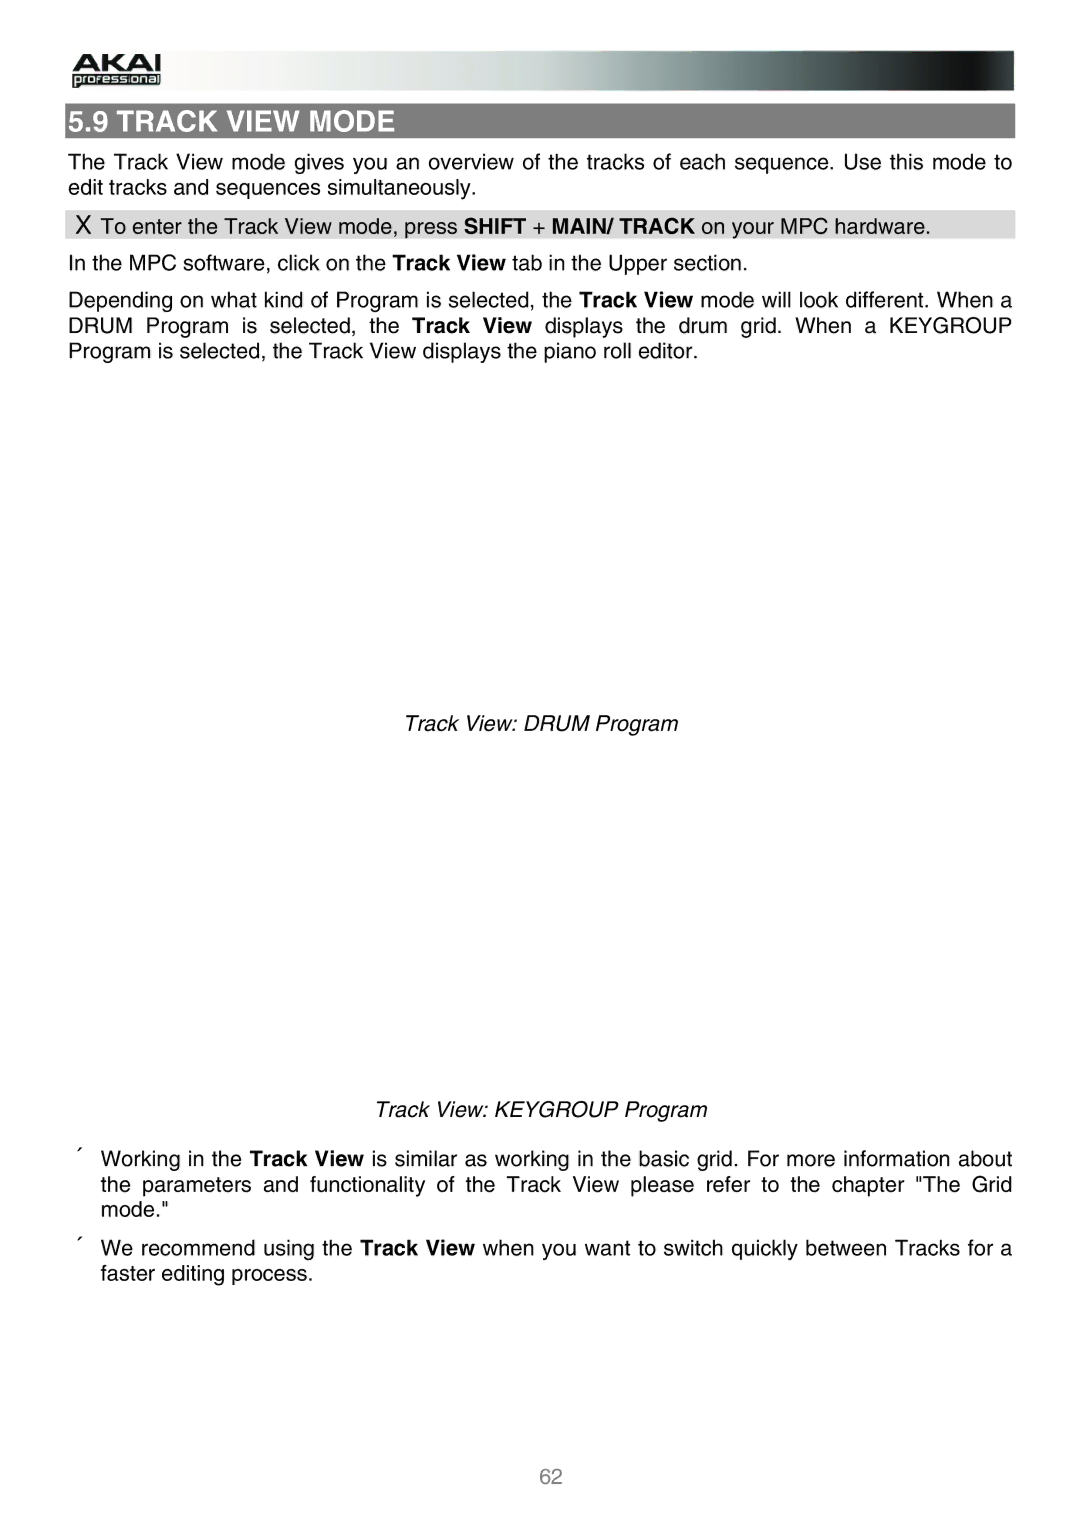 Akai MPC manual Track View Mode, Track View Drum Program Track View Keygroup Program 